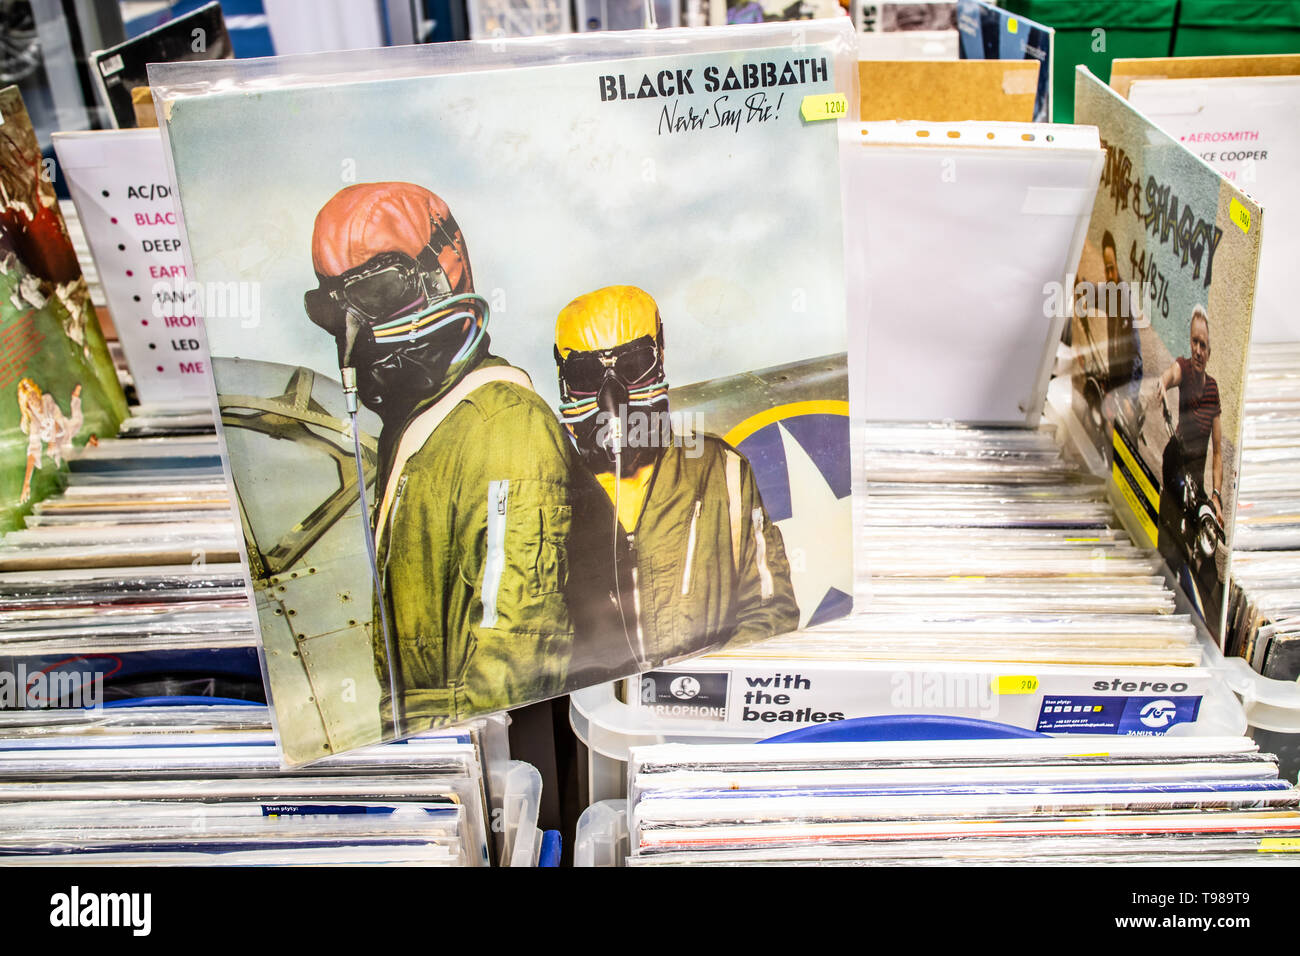 Nadarzyn, Poland, May 11, 2019 Black Sabbath vinyl album on display for sale, Vinyl, LP, Album, Rock, English rock band, collection of Vinyls Stock Photo